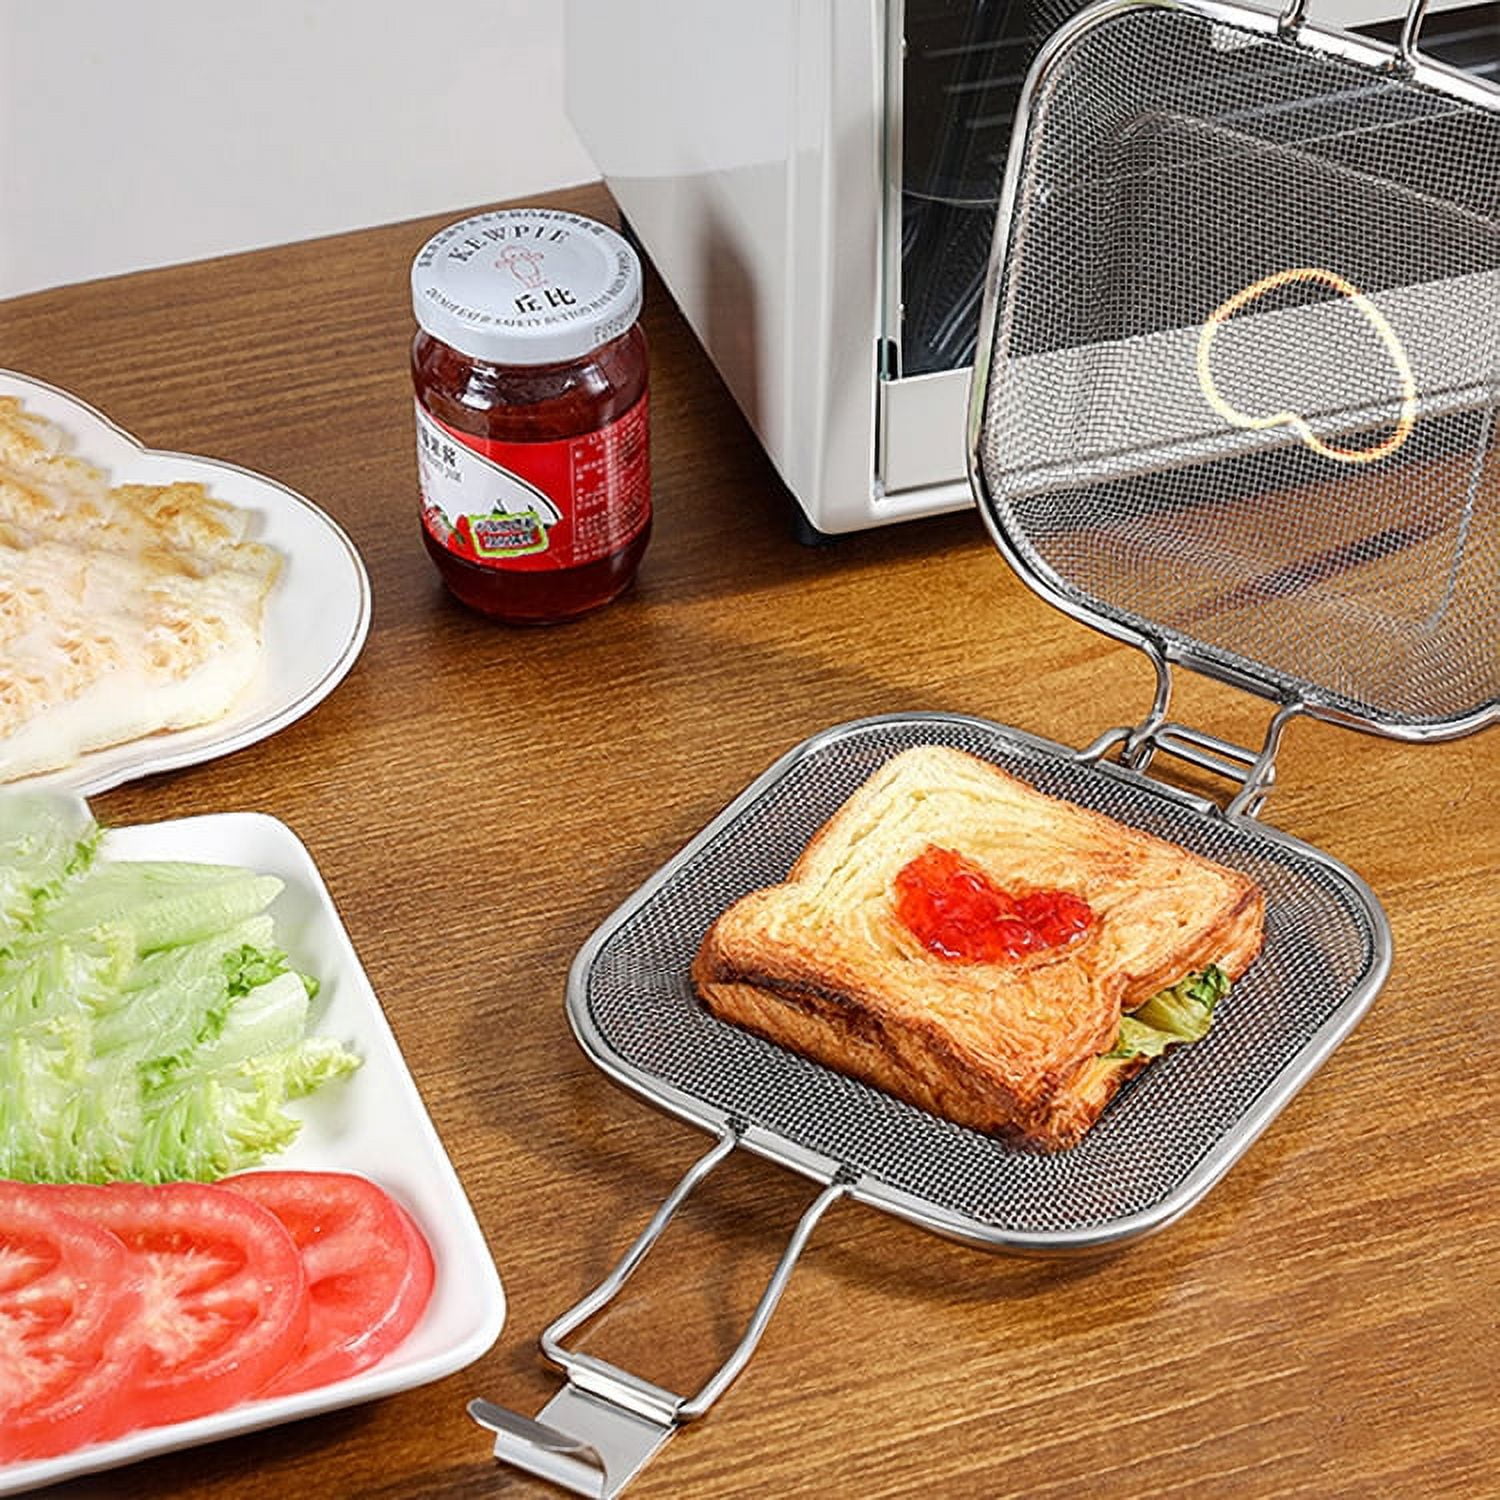  Sandwich Maker, Non-Stick Stainless Steel Grilled Net